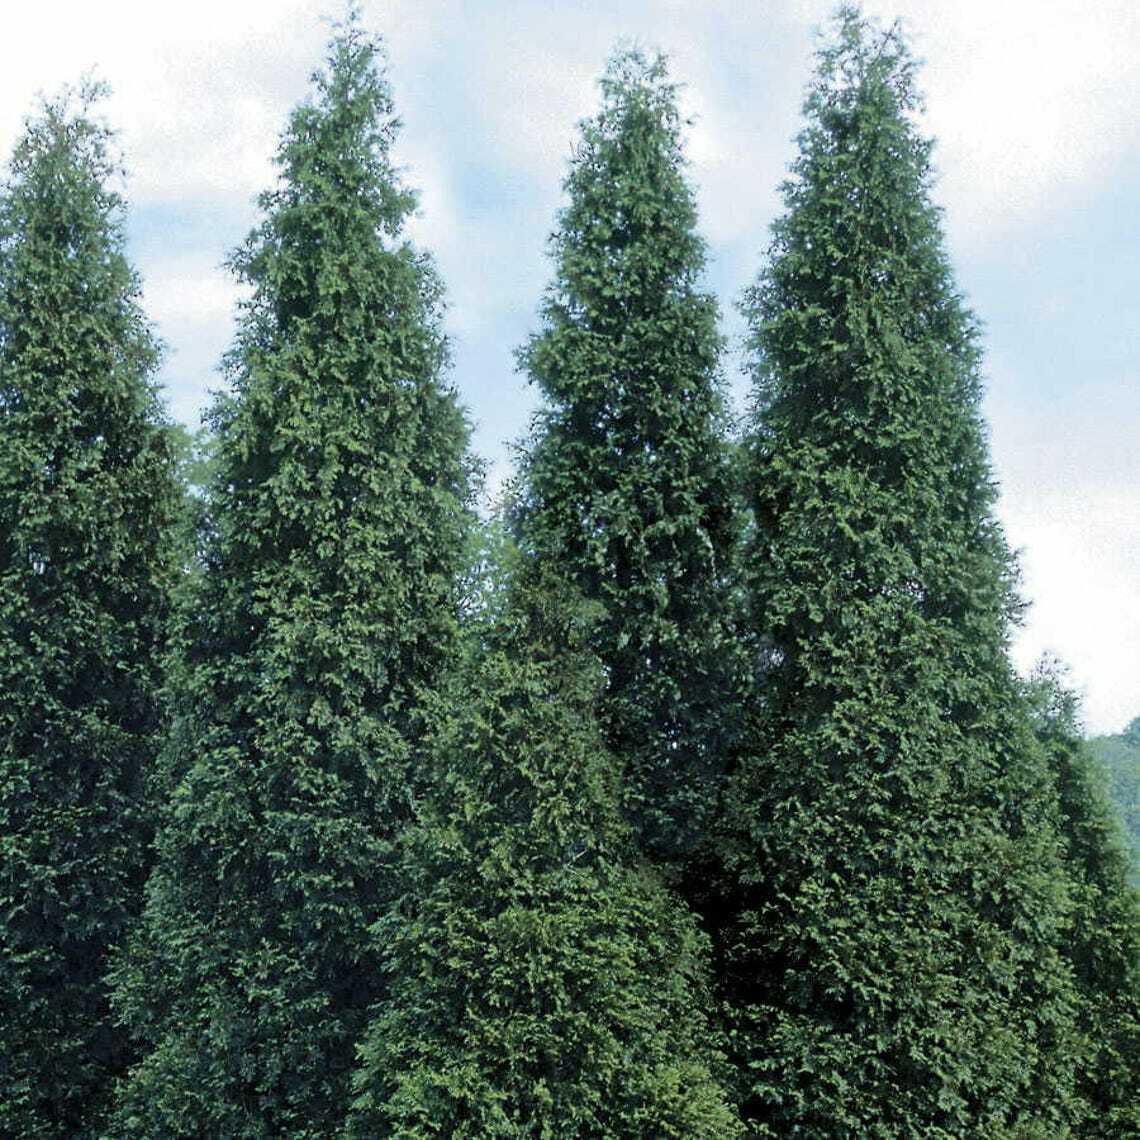 75 Thuja Green Giant Arborvitae Trees/Shrubs - 12-16" Tall Live Plants - 3" Pots - The Nursery Center